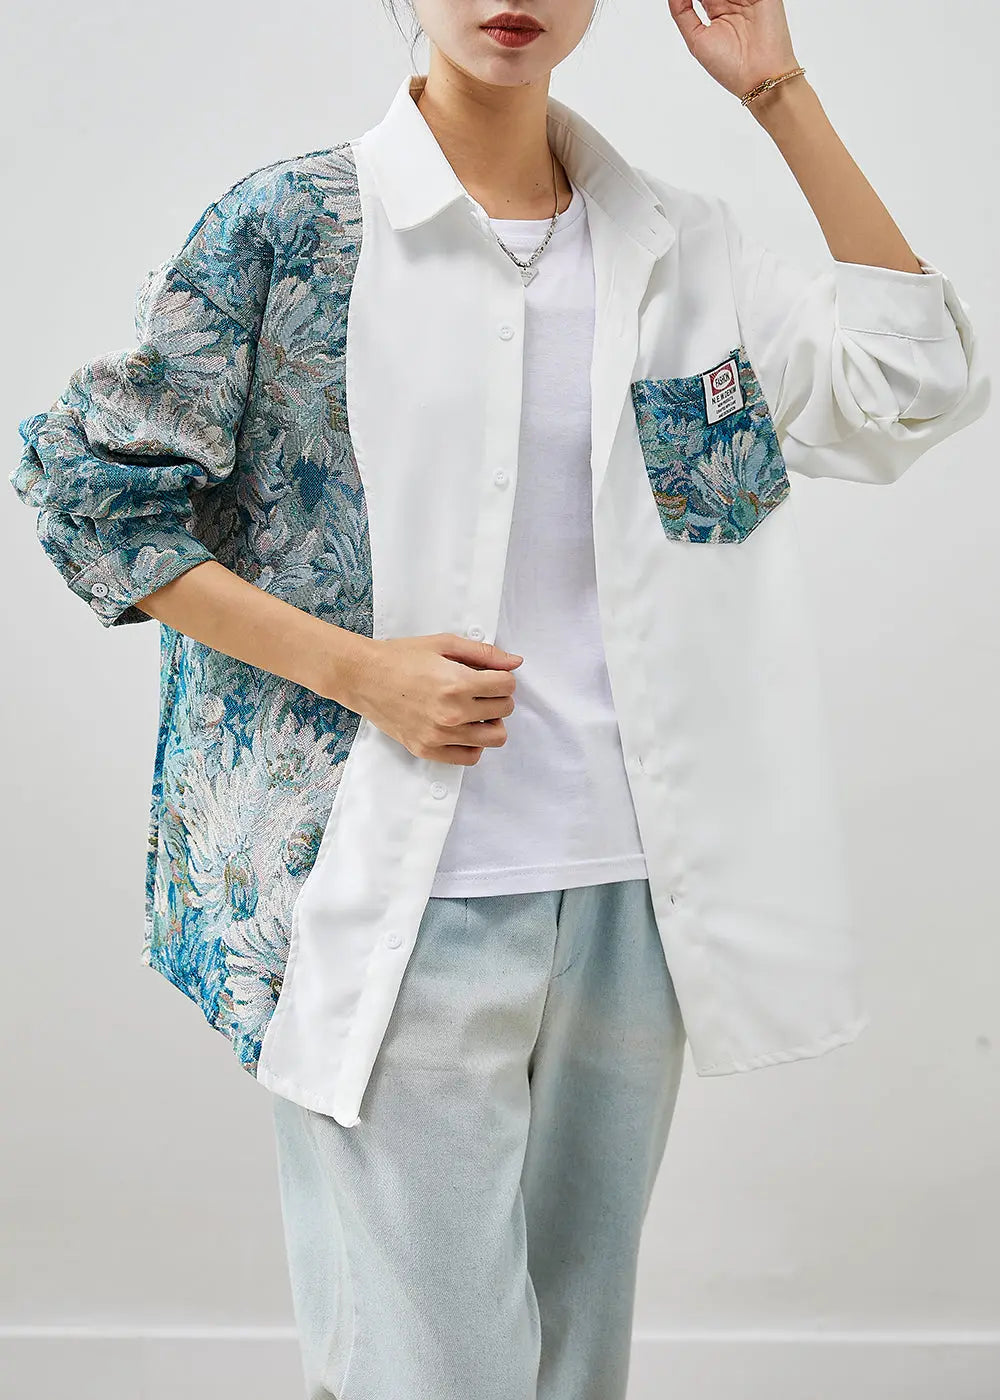 Handmade Colorblock Asymmetrical Patchwork Cotton Shirts Fall Ada Fashion